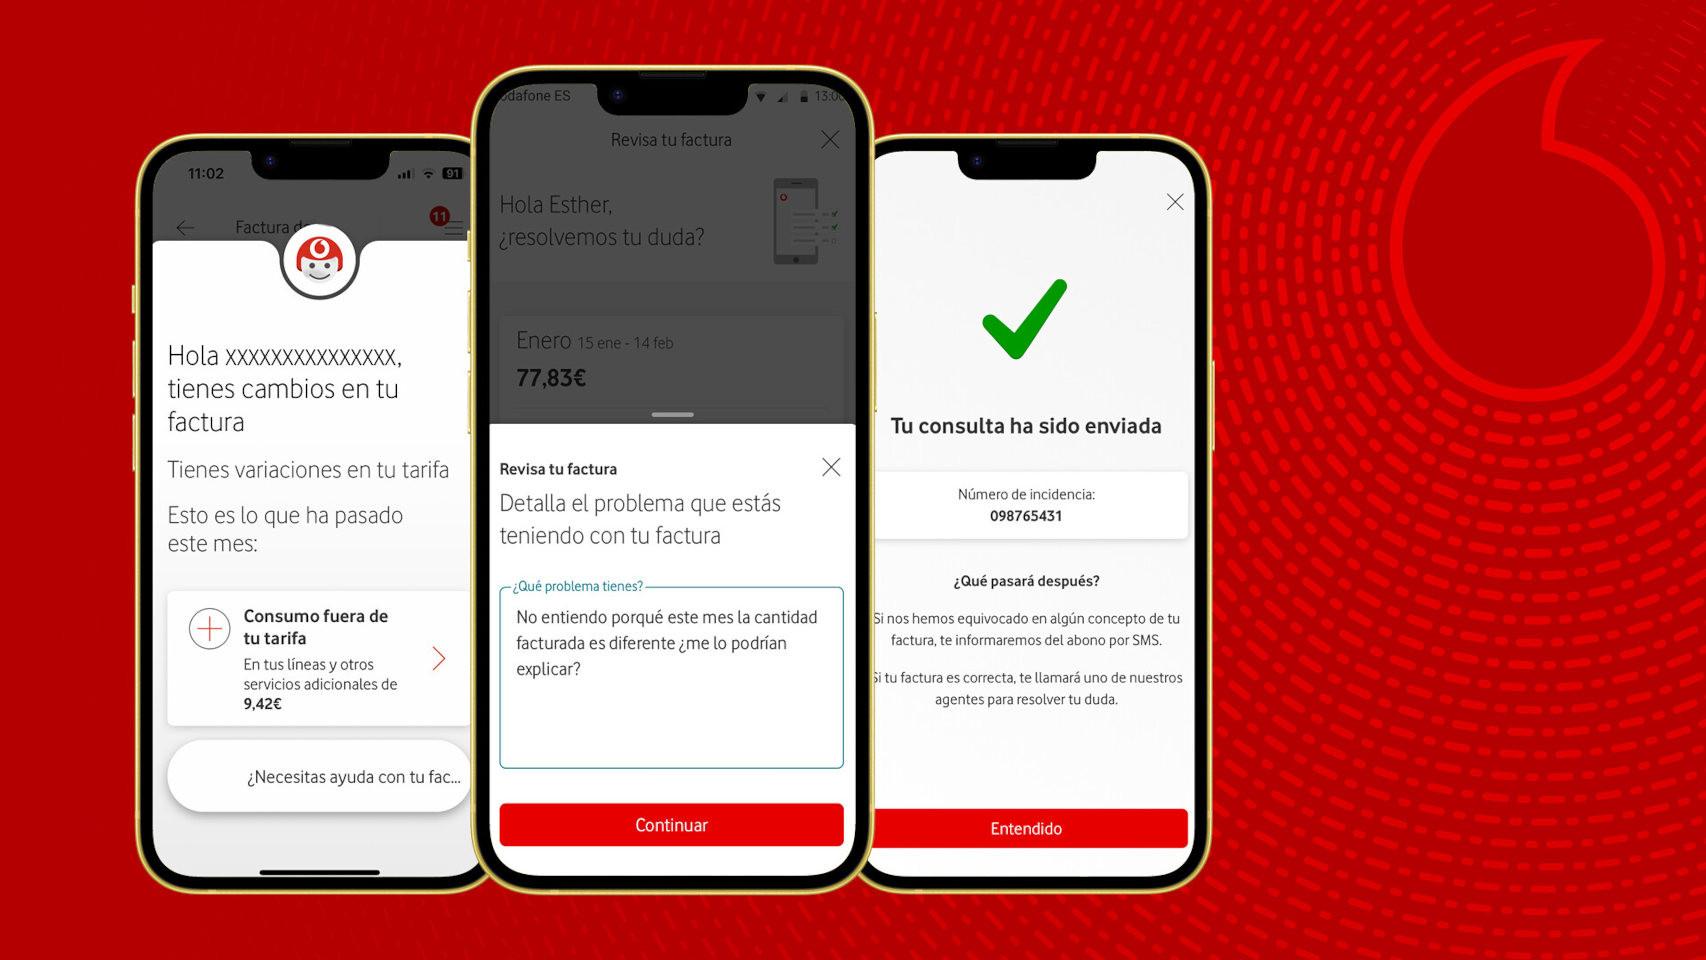 Vodafone app now automatically reviews bill